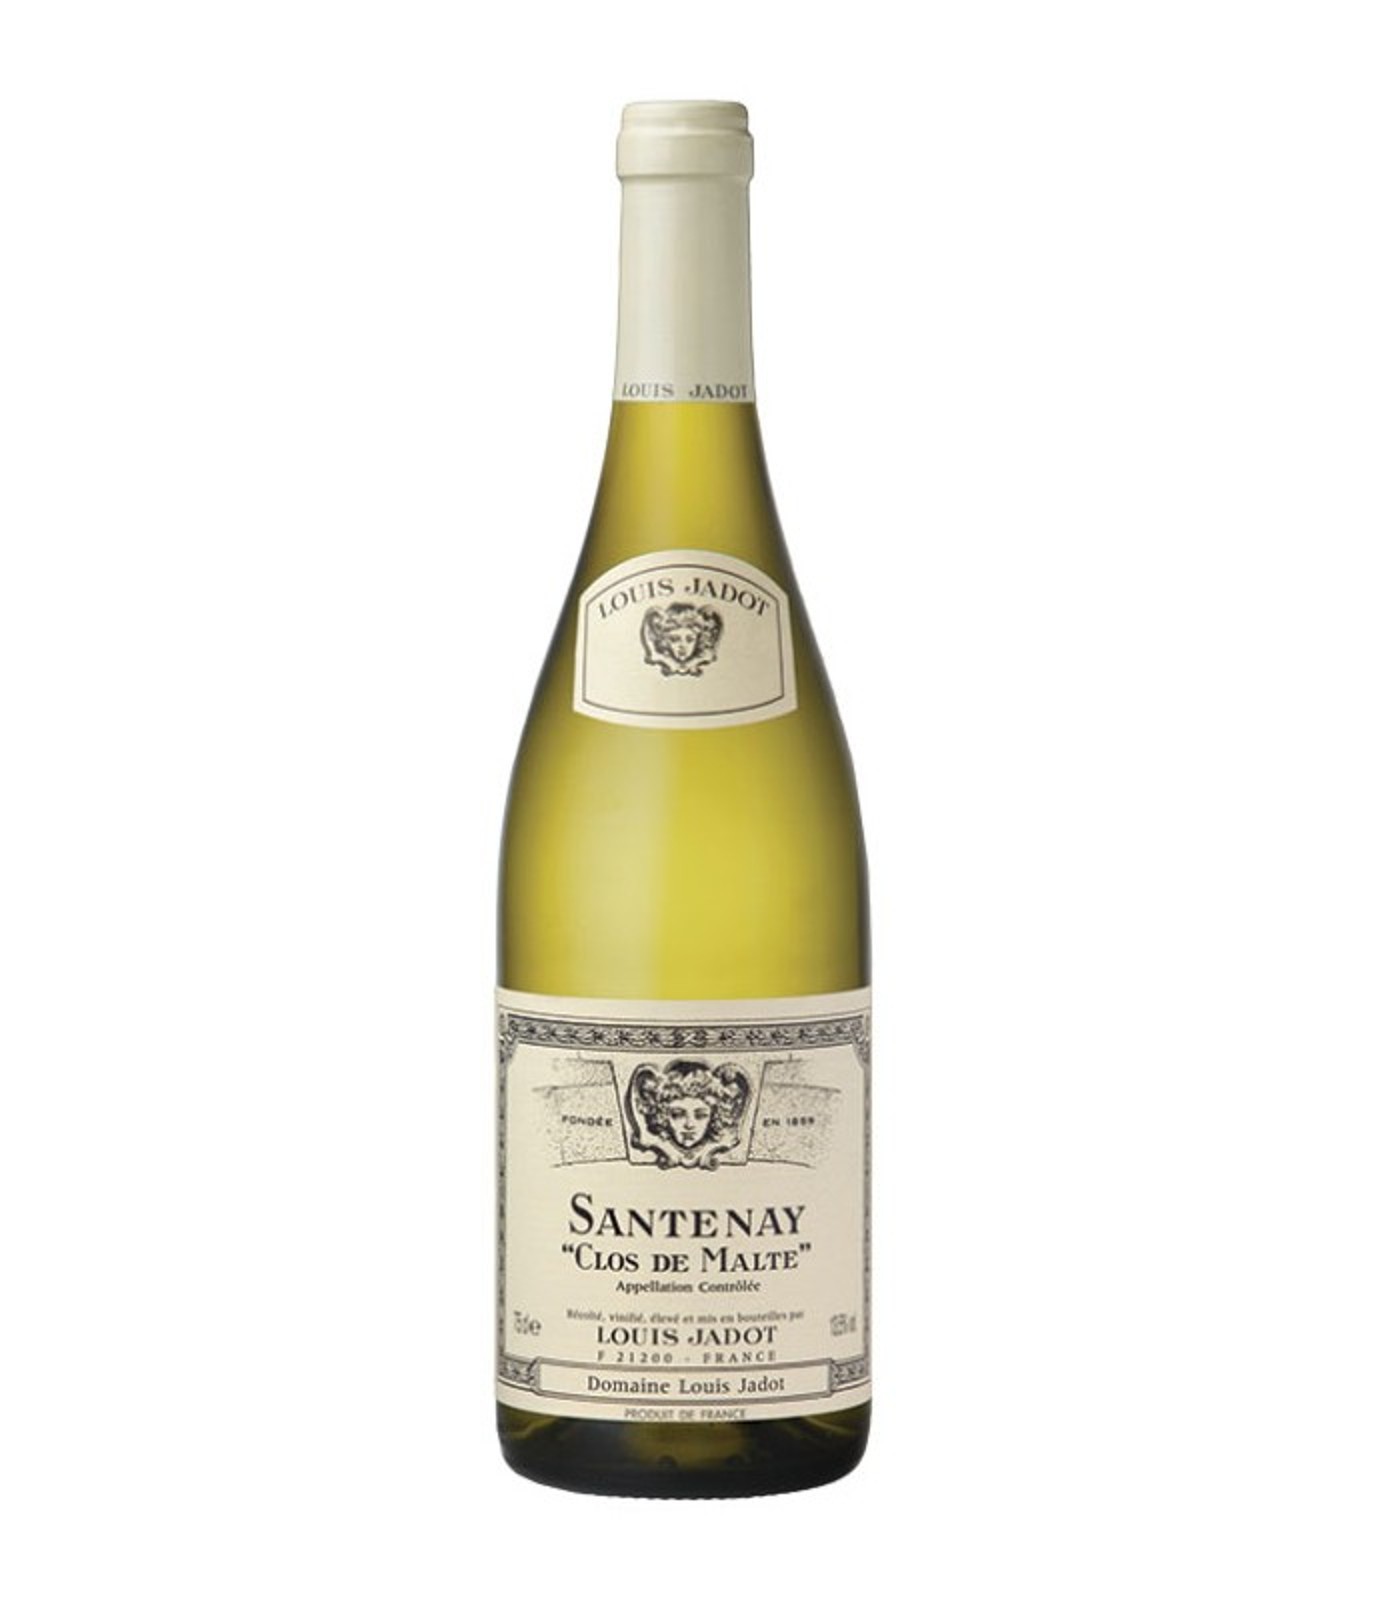 Santenay blanc Clos de Malte Louis Jadot